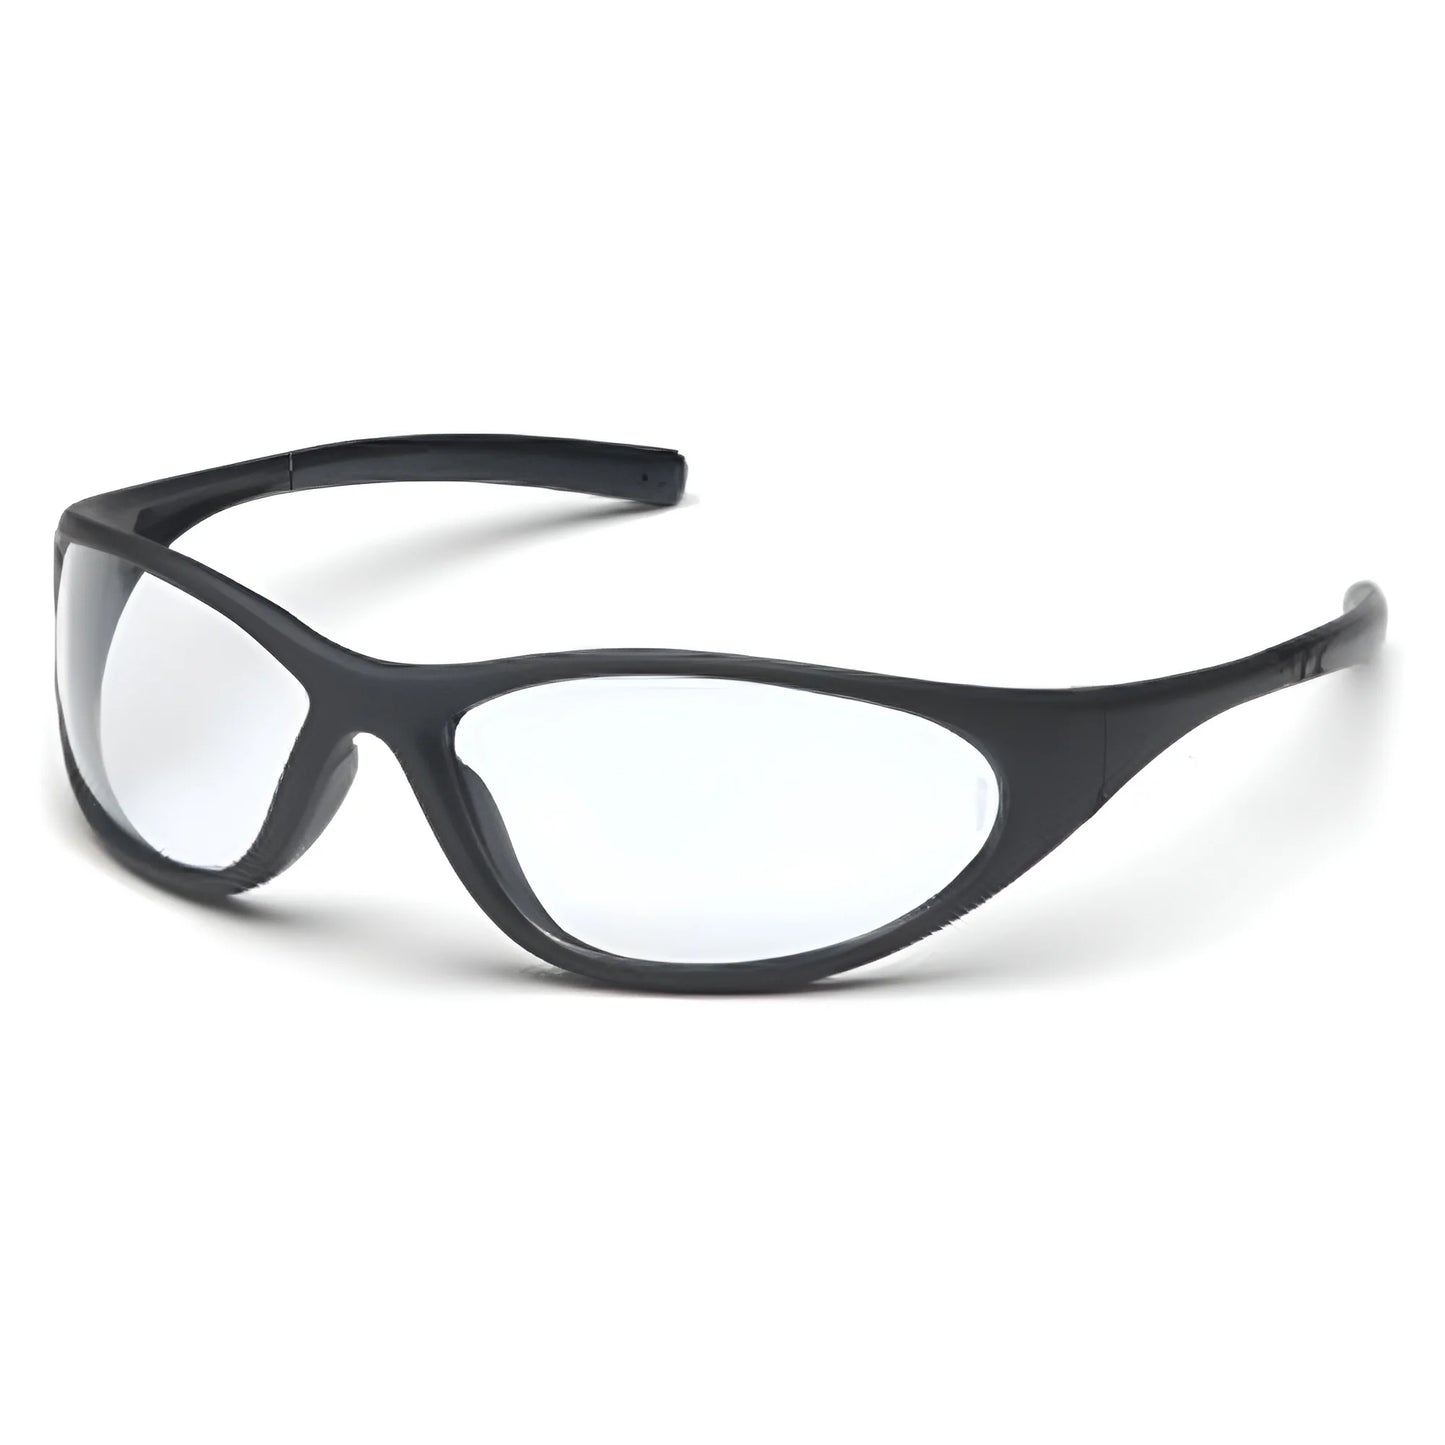 Pyramex Safety Glasses Zone Clear Lens Tortoise Frame